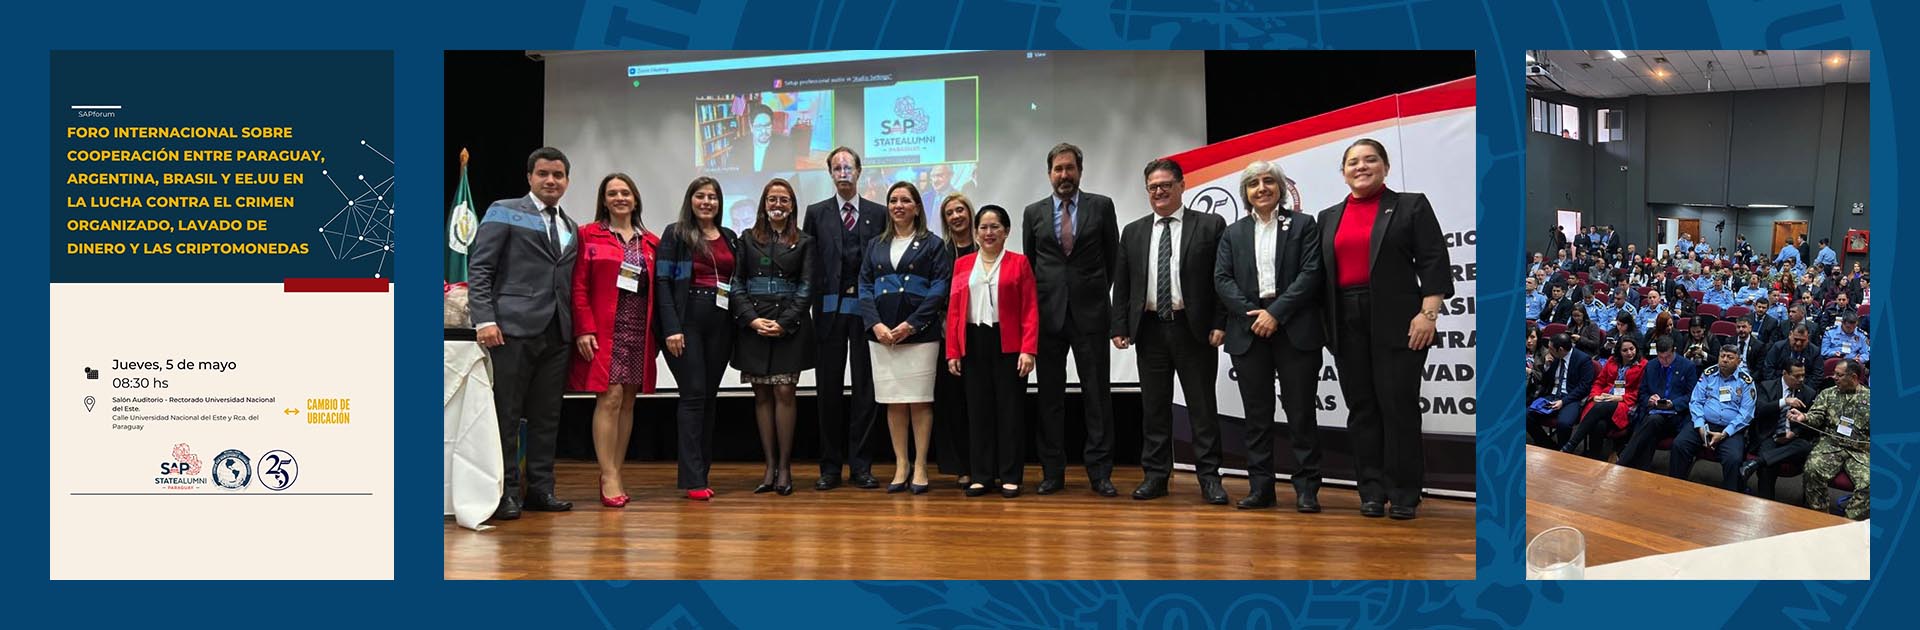 State Alumni Paraguay International Forum